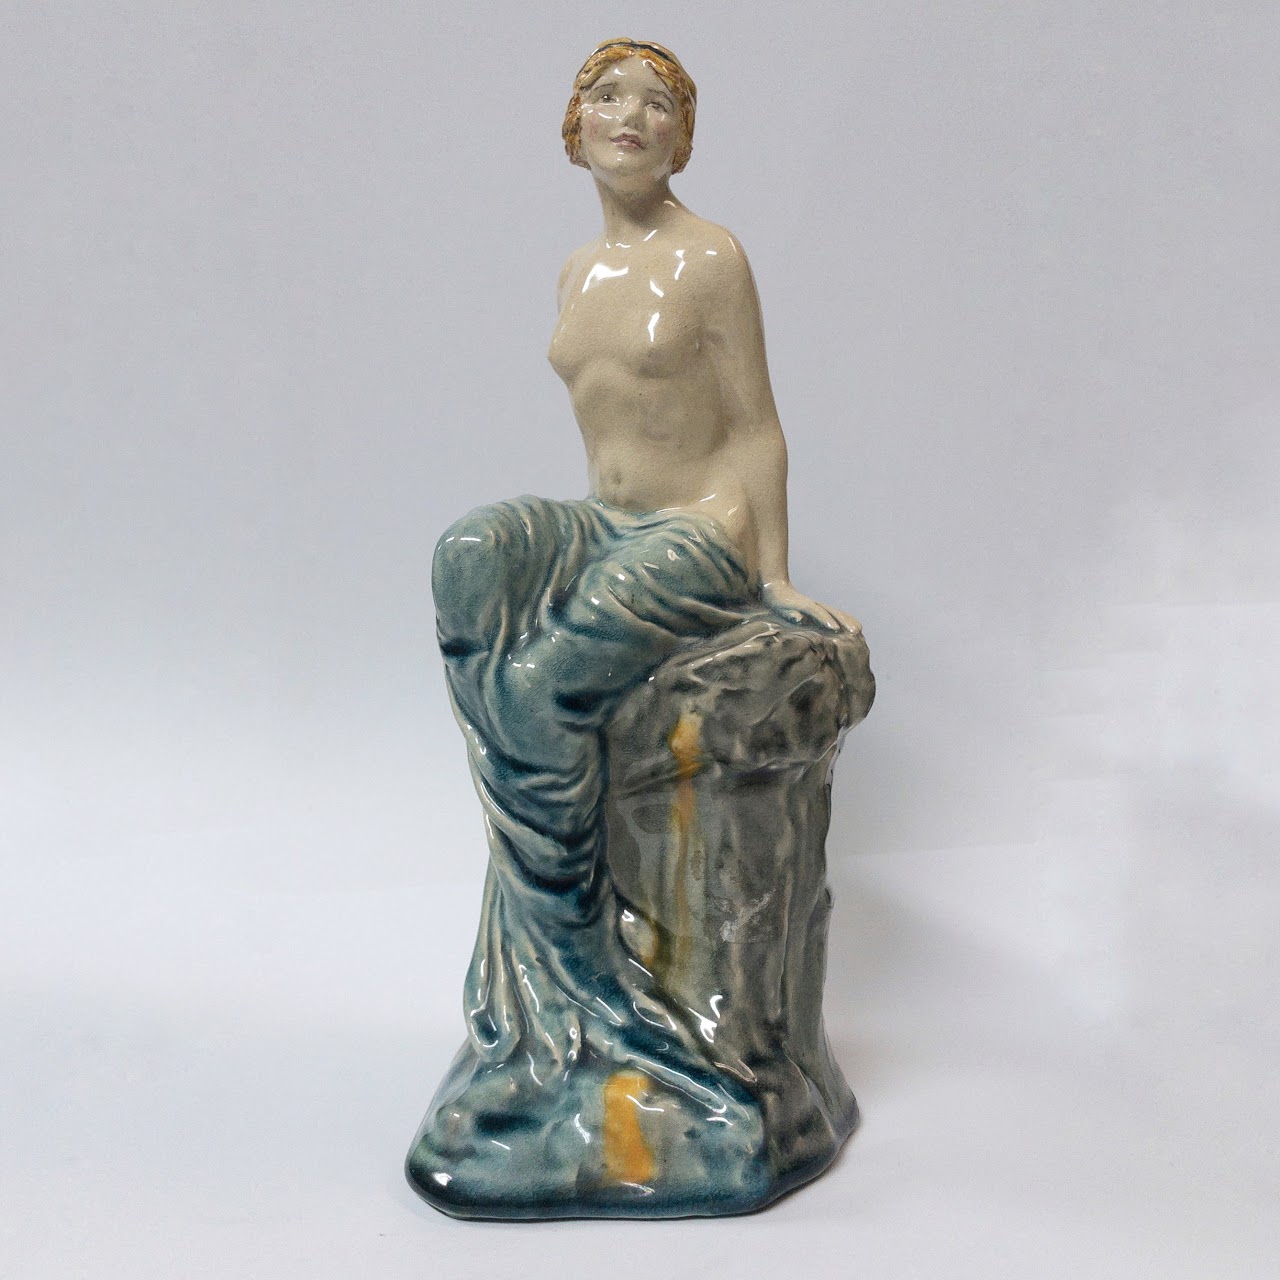 Helen Wickham 'The Bather' Figurine, c. 1920s